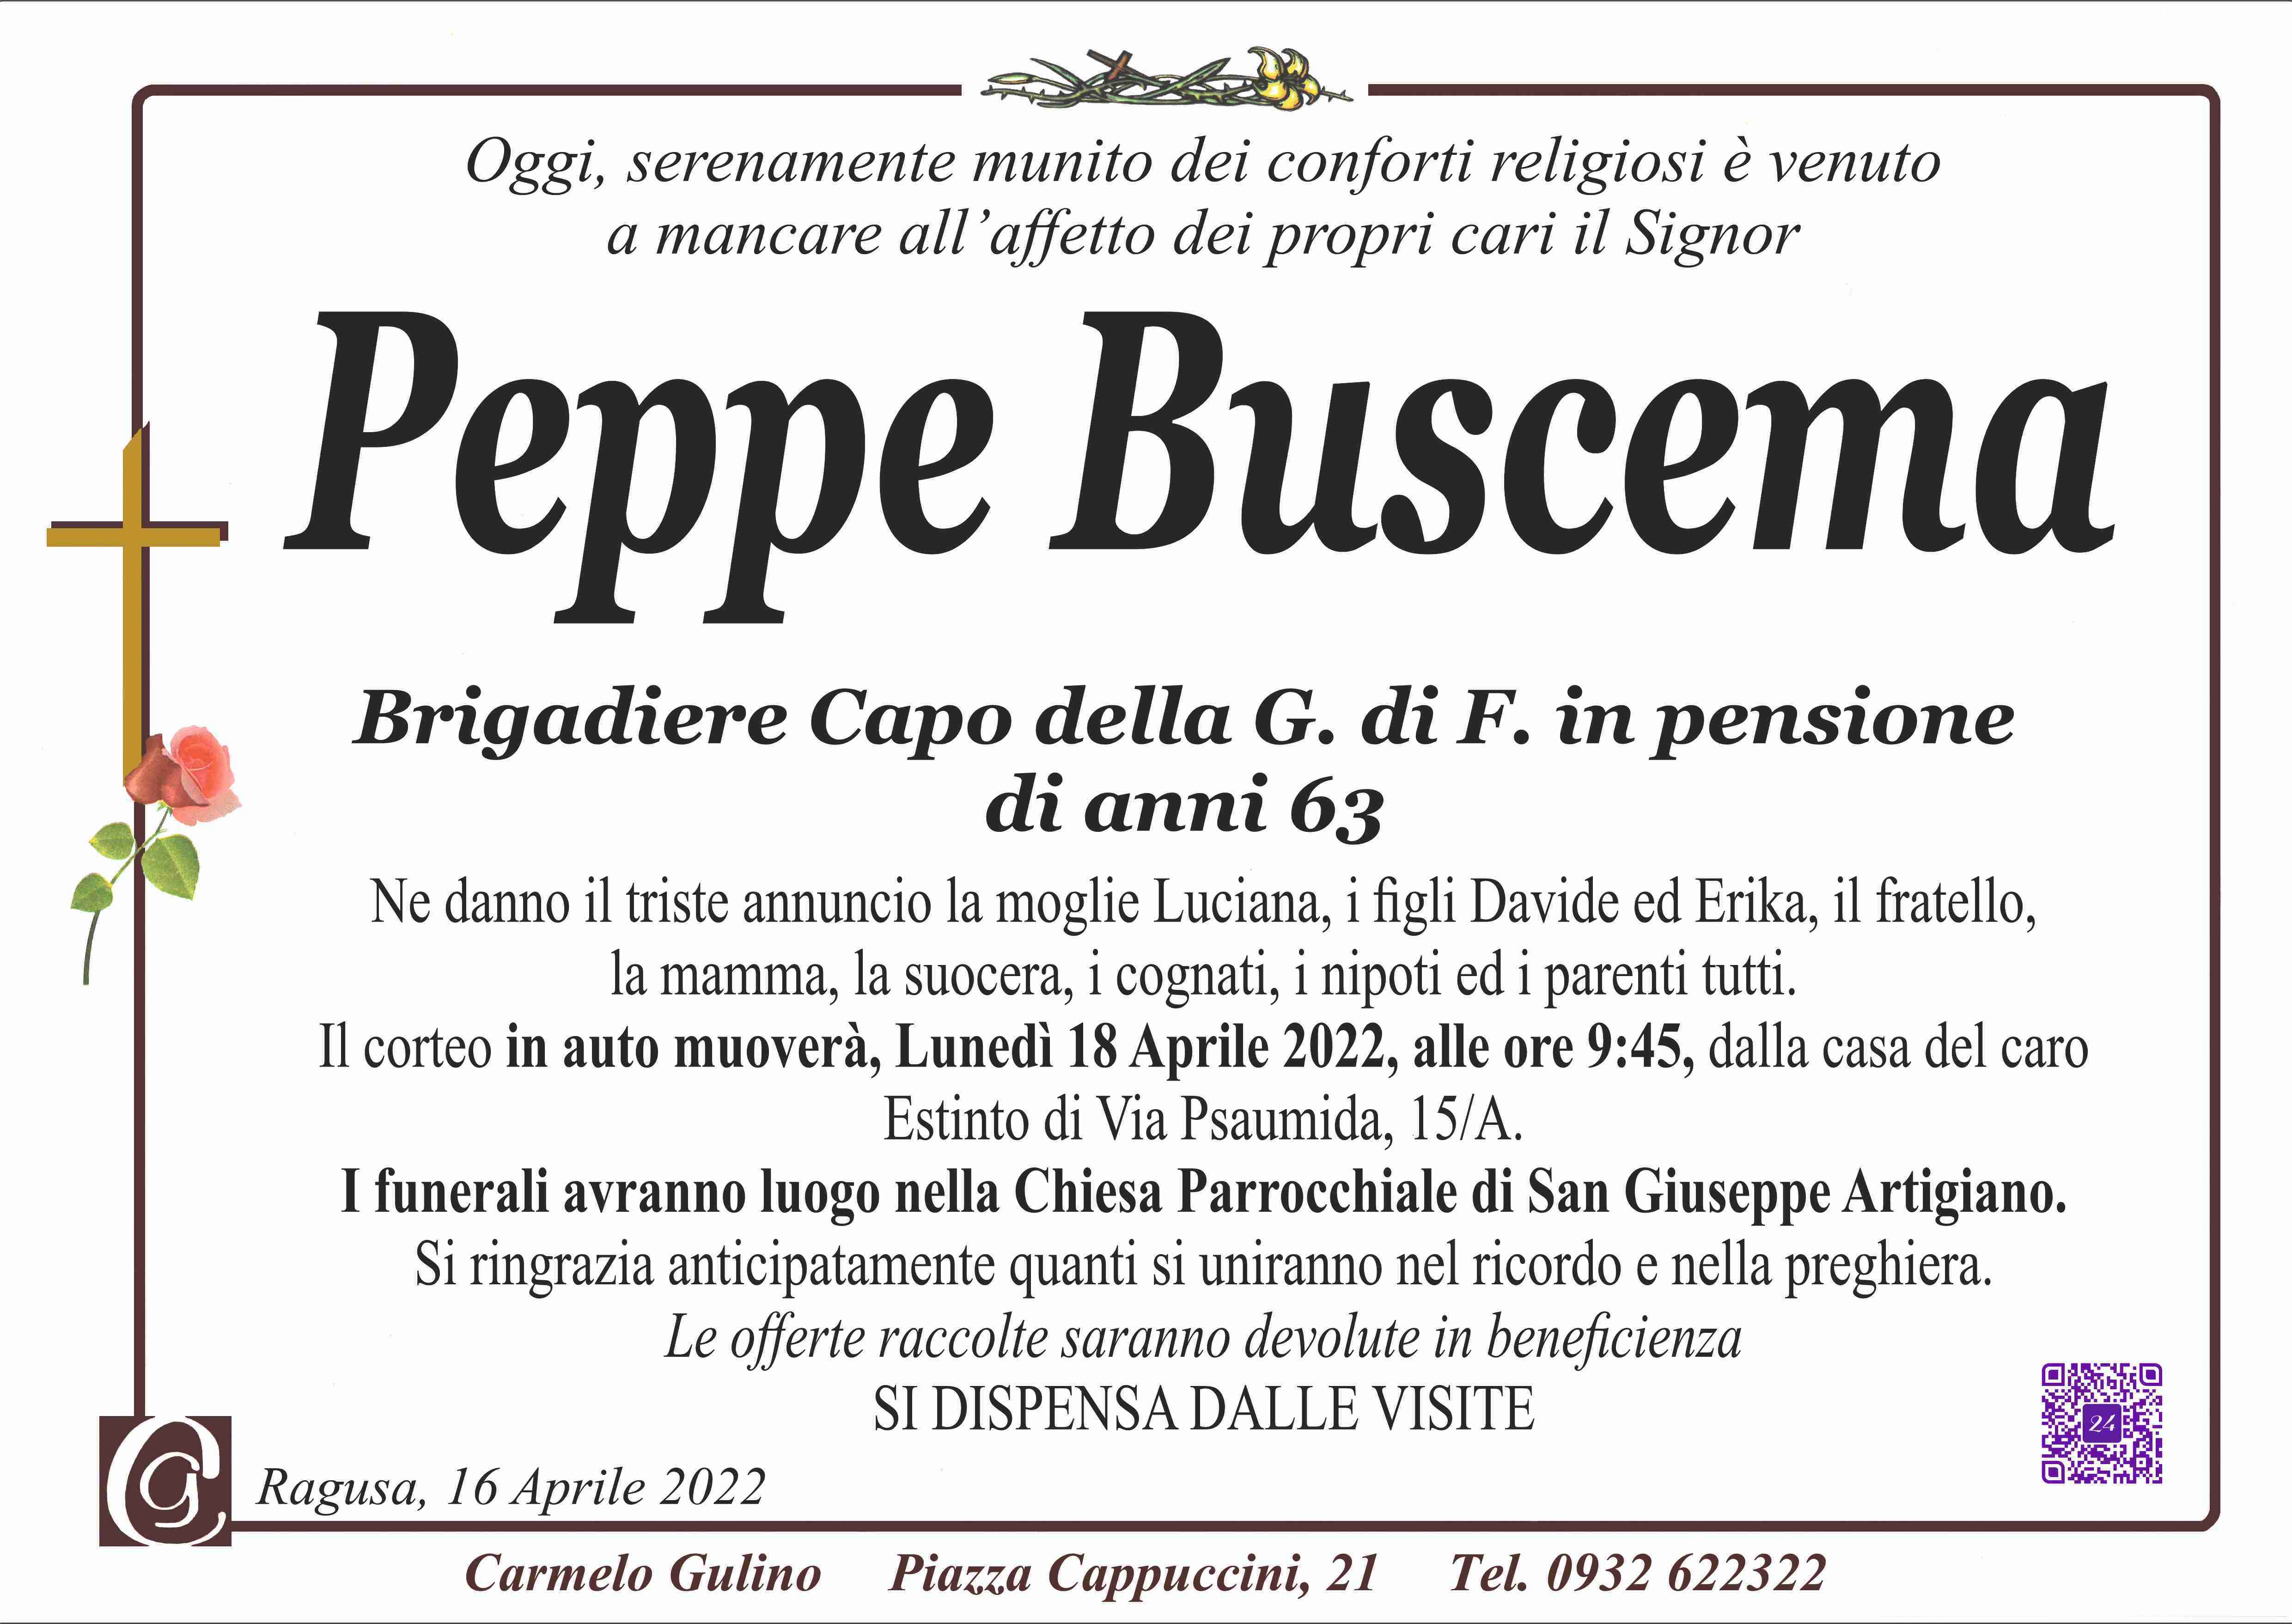 Giuseppe Buscema